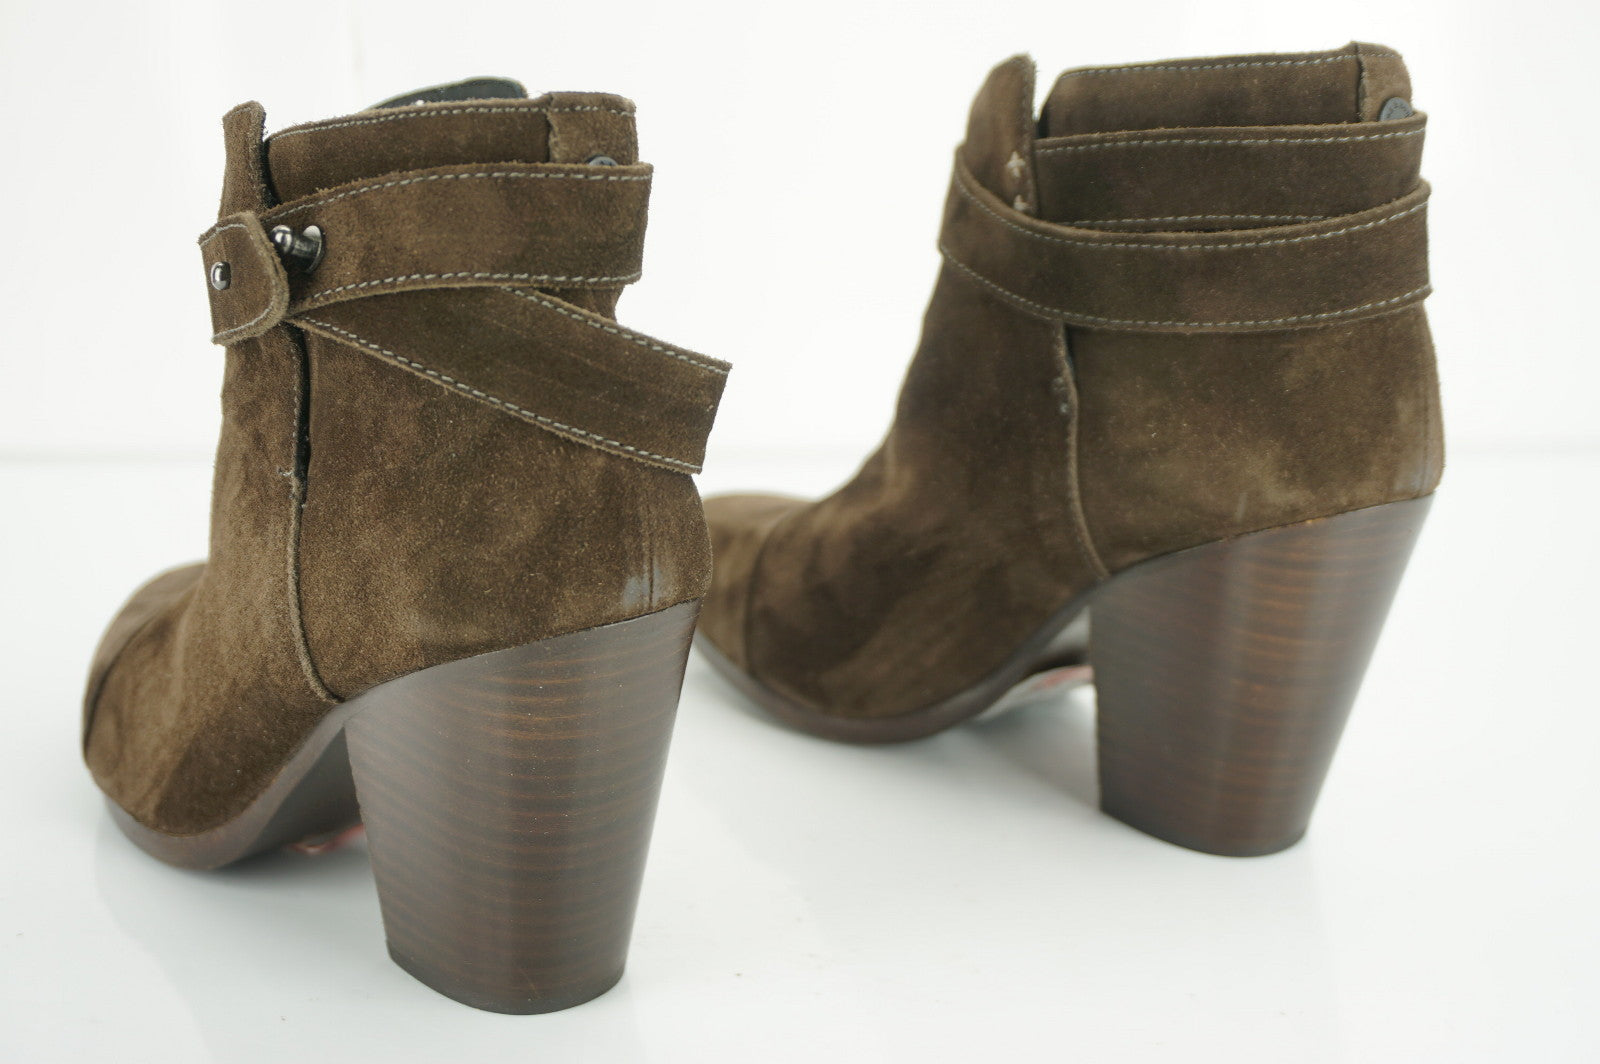 Rag & Bone Brown Suede Harrow Strappy Block Heel Ankle Boots Size 37.5 $495 NIB